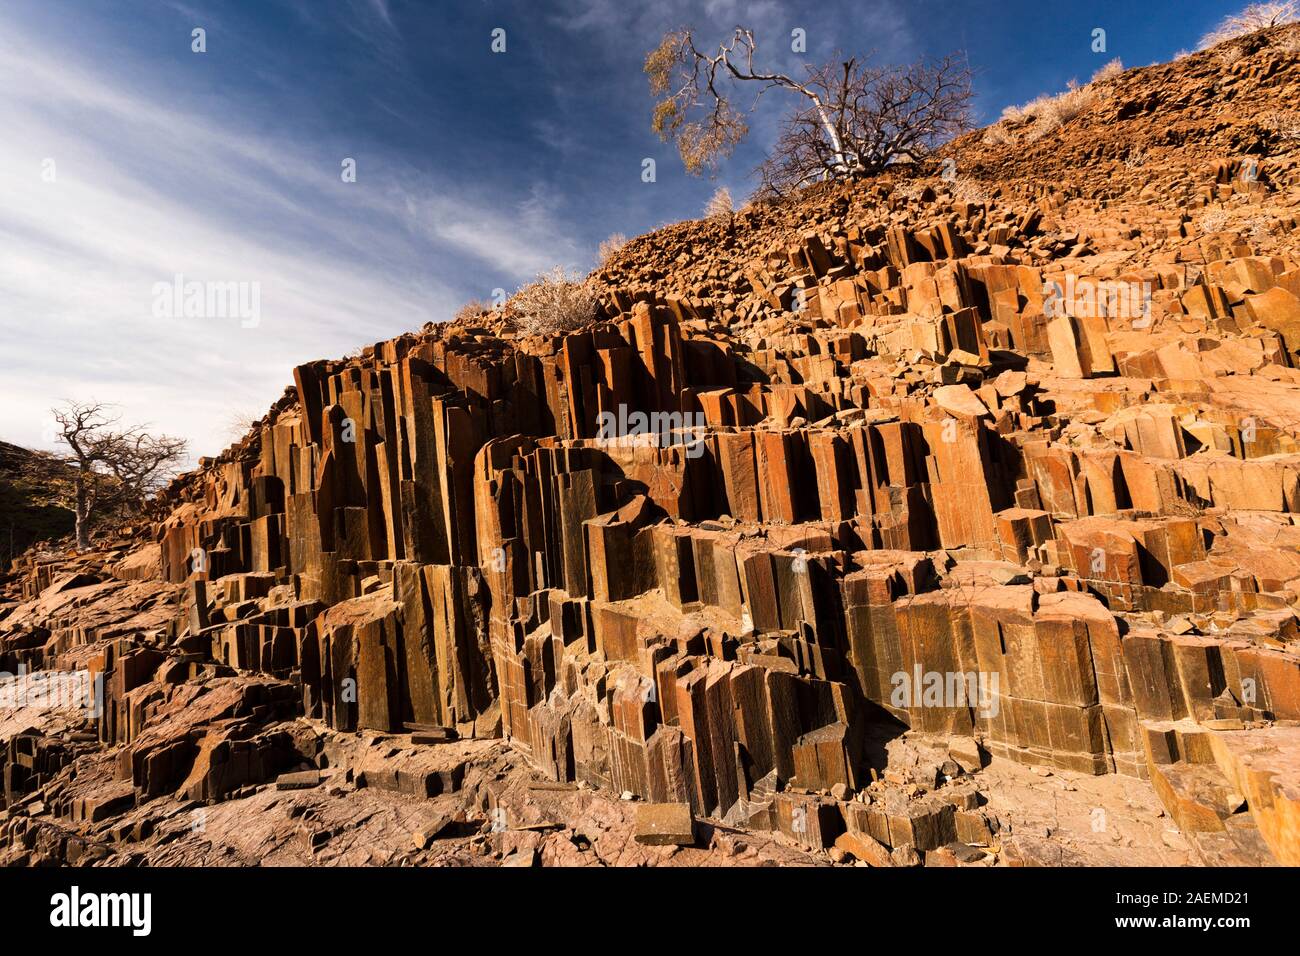 Organ pipes, columnar basalt, near Twyfelfontein, Namibia, Africa Stock Photo